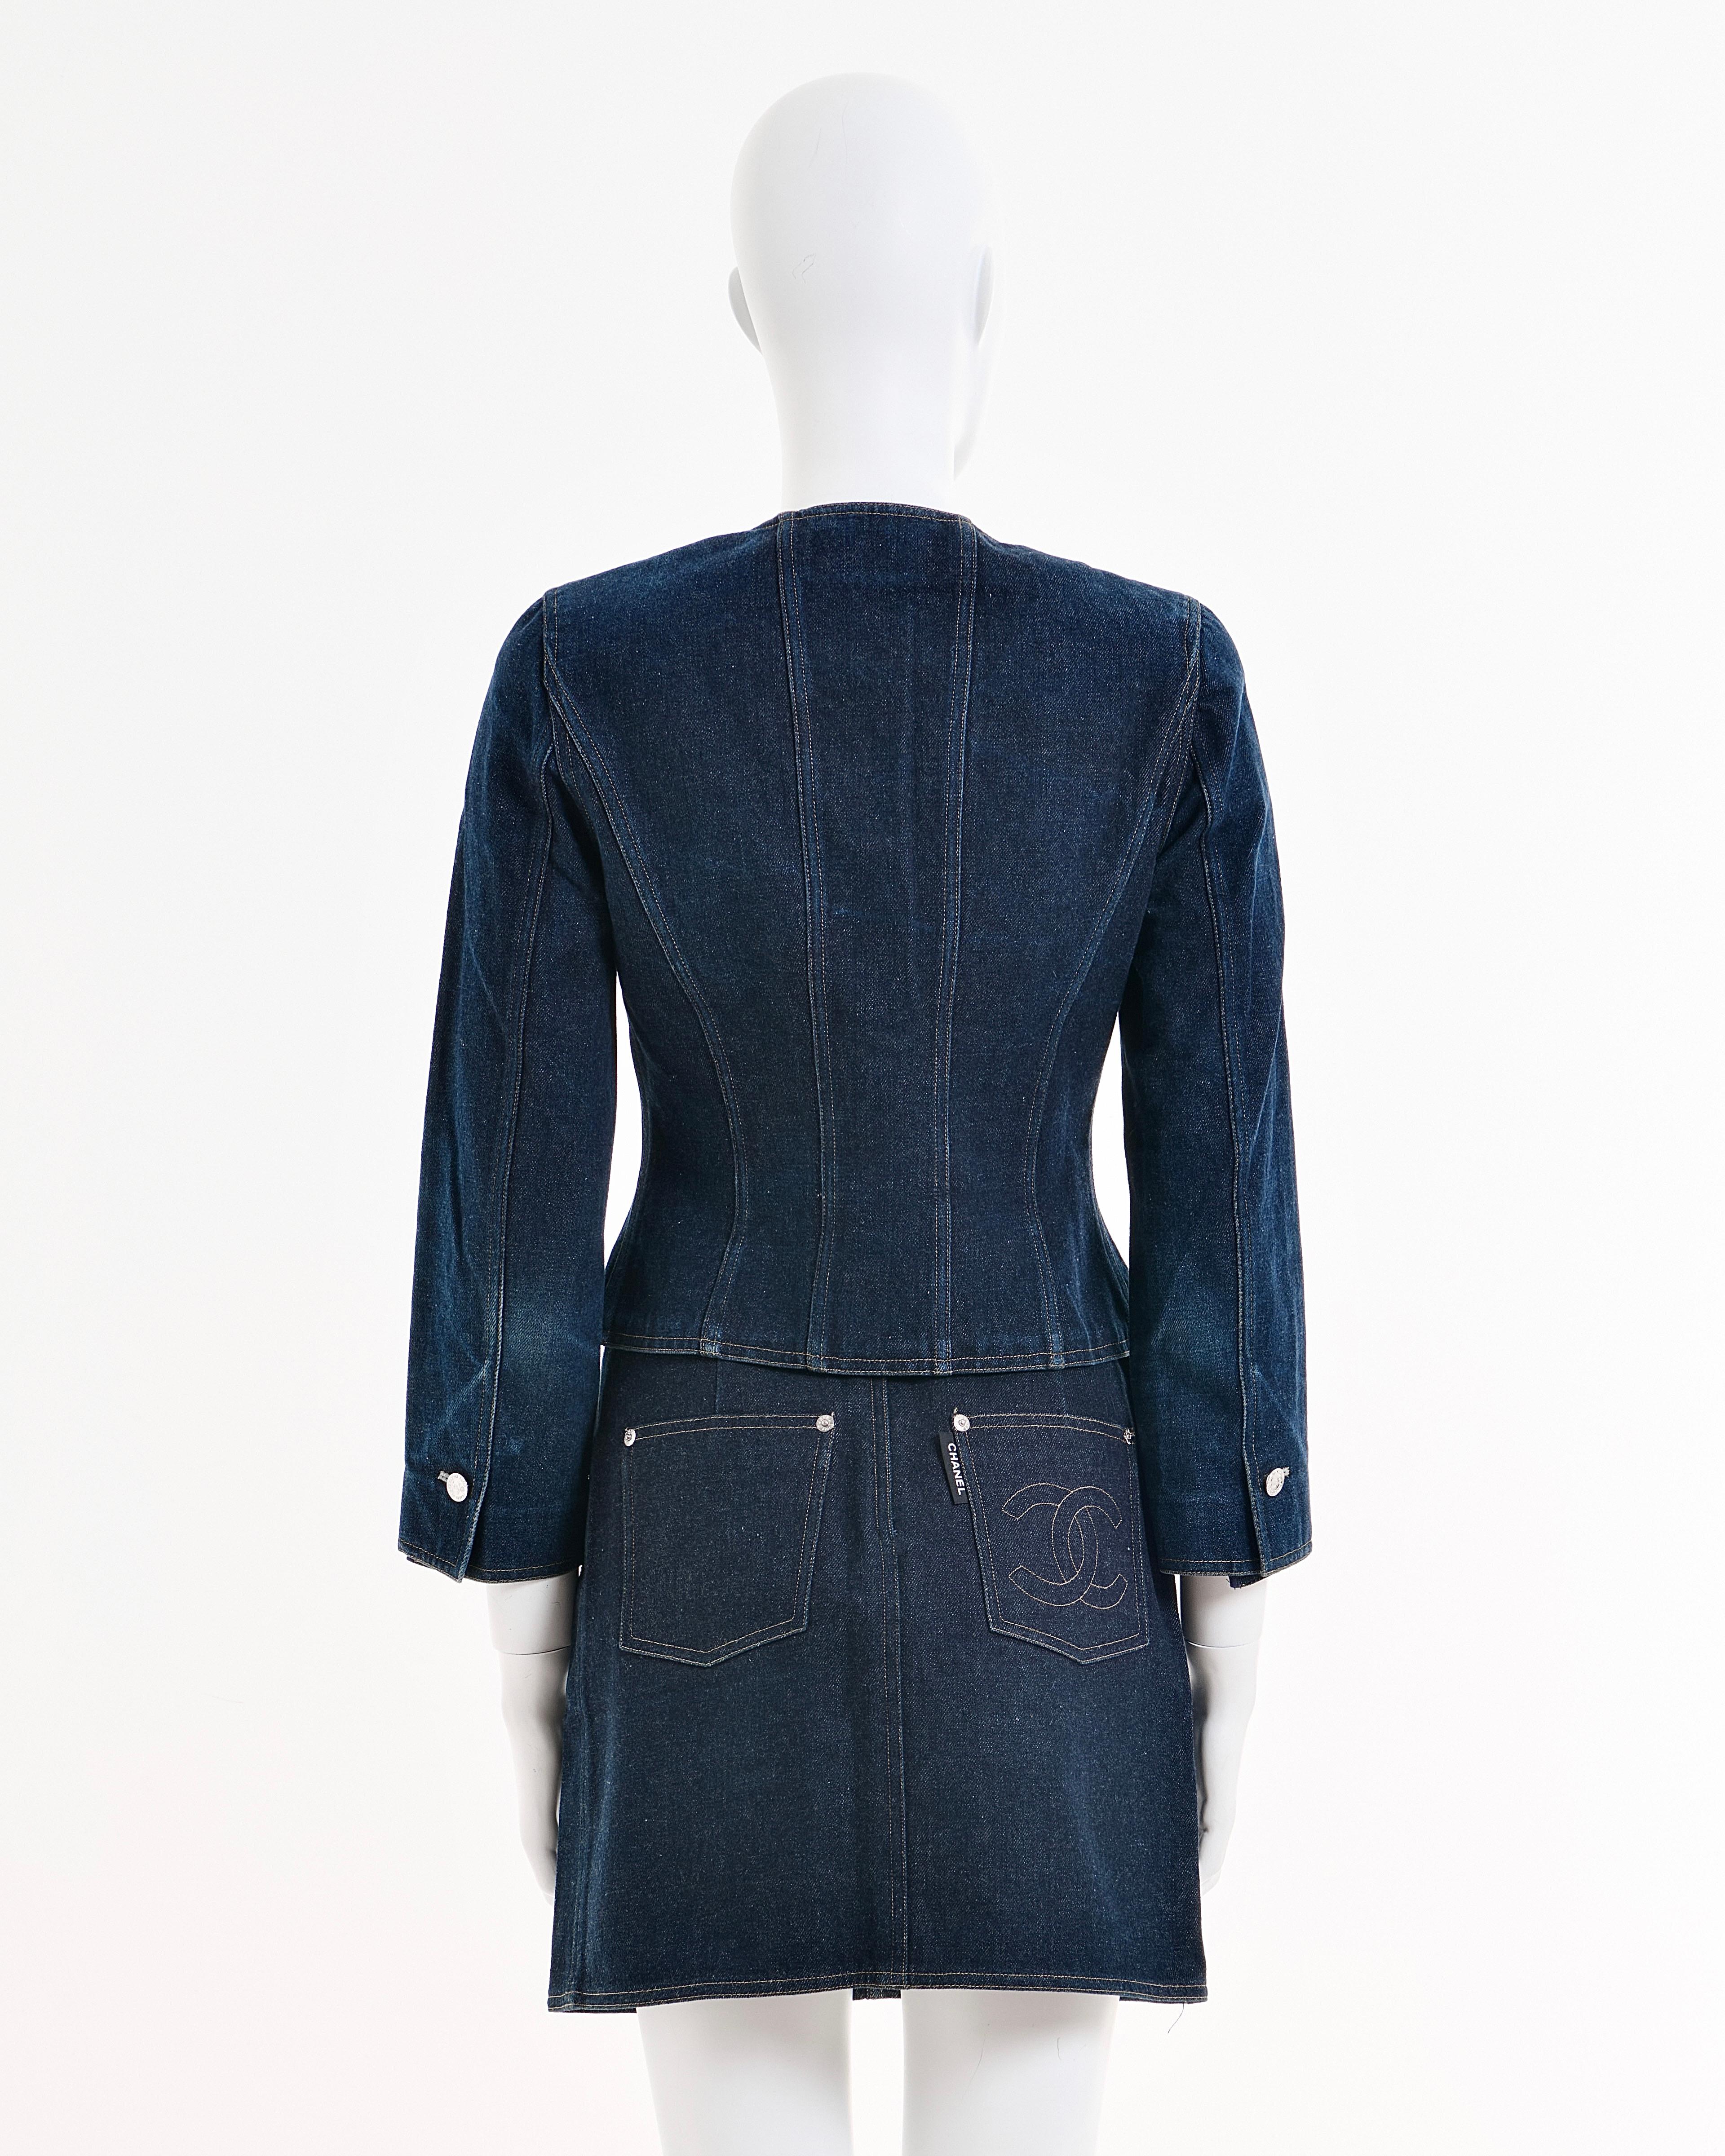 Chanel by Karl Lagerfeld S/S 1996 Blue denim indigo jacket and mini skirt set For Sale 1